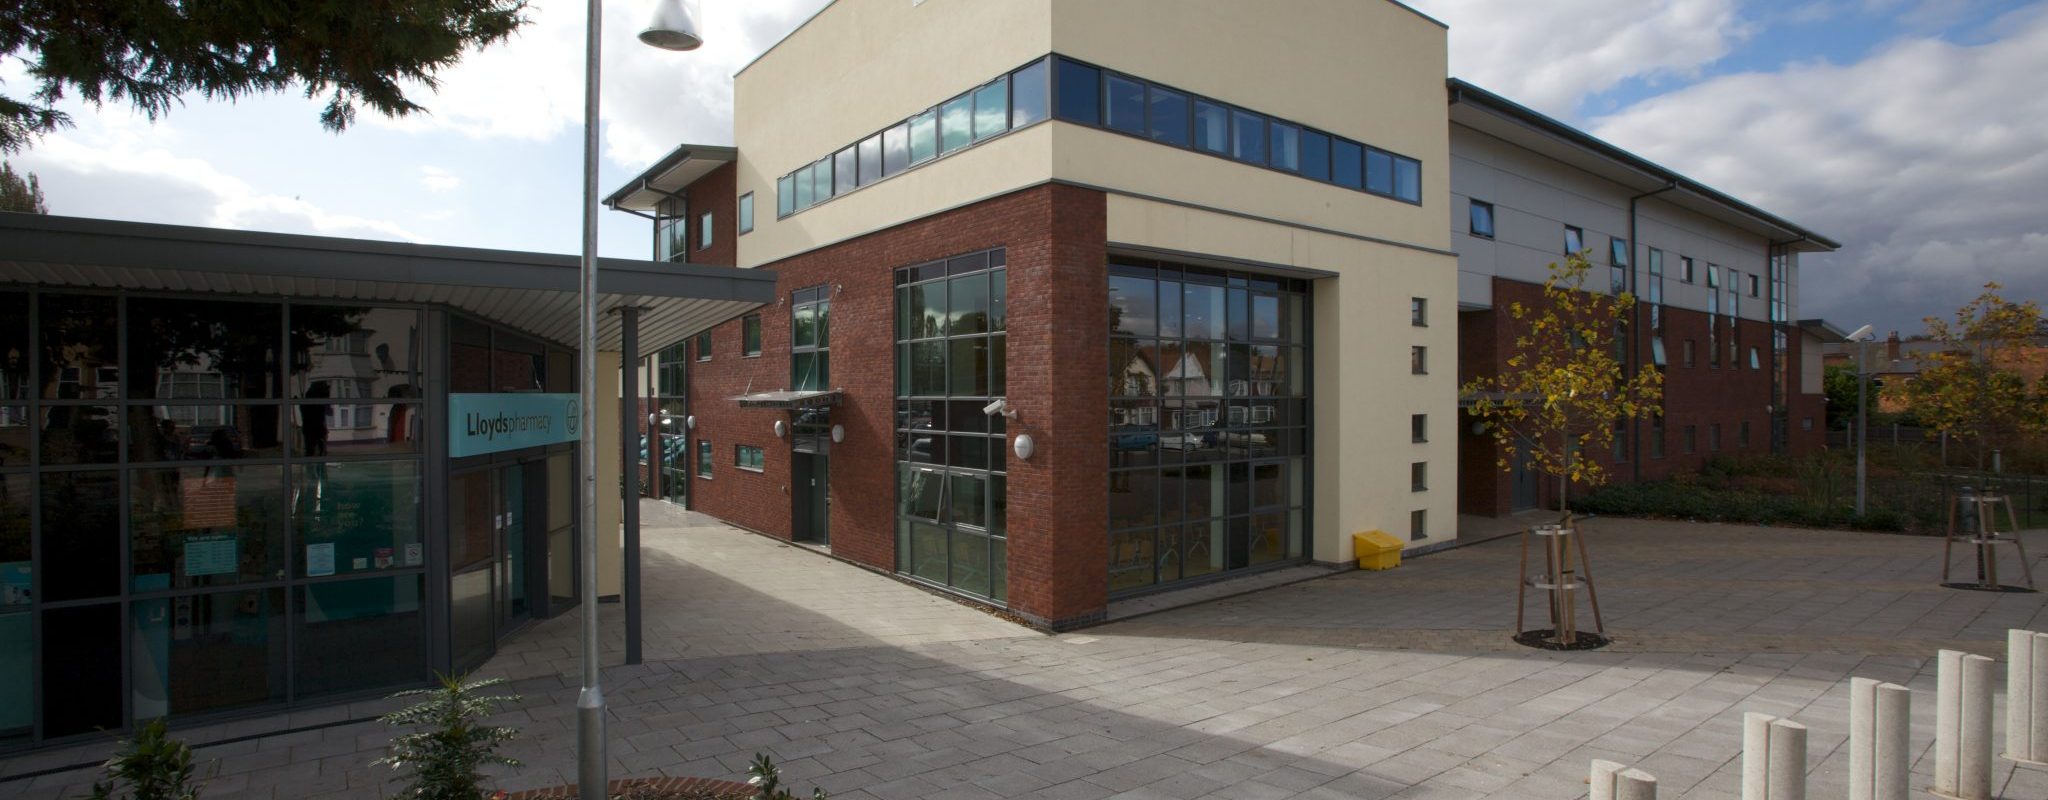 Stockland Green Primary Care Centre